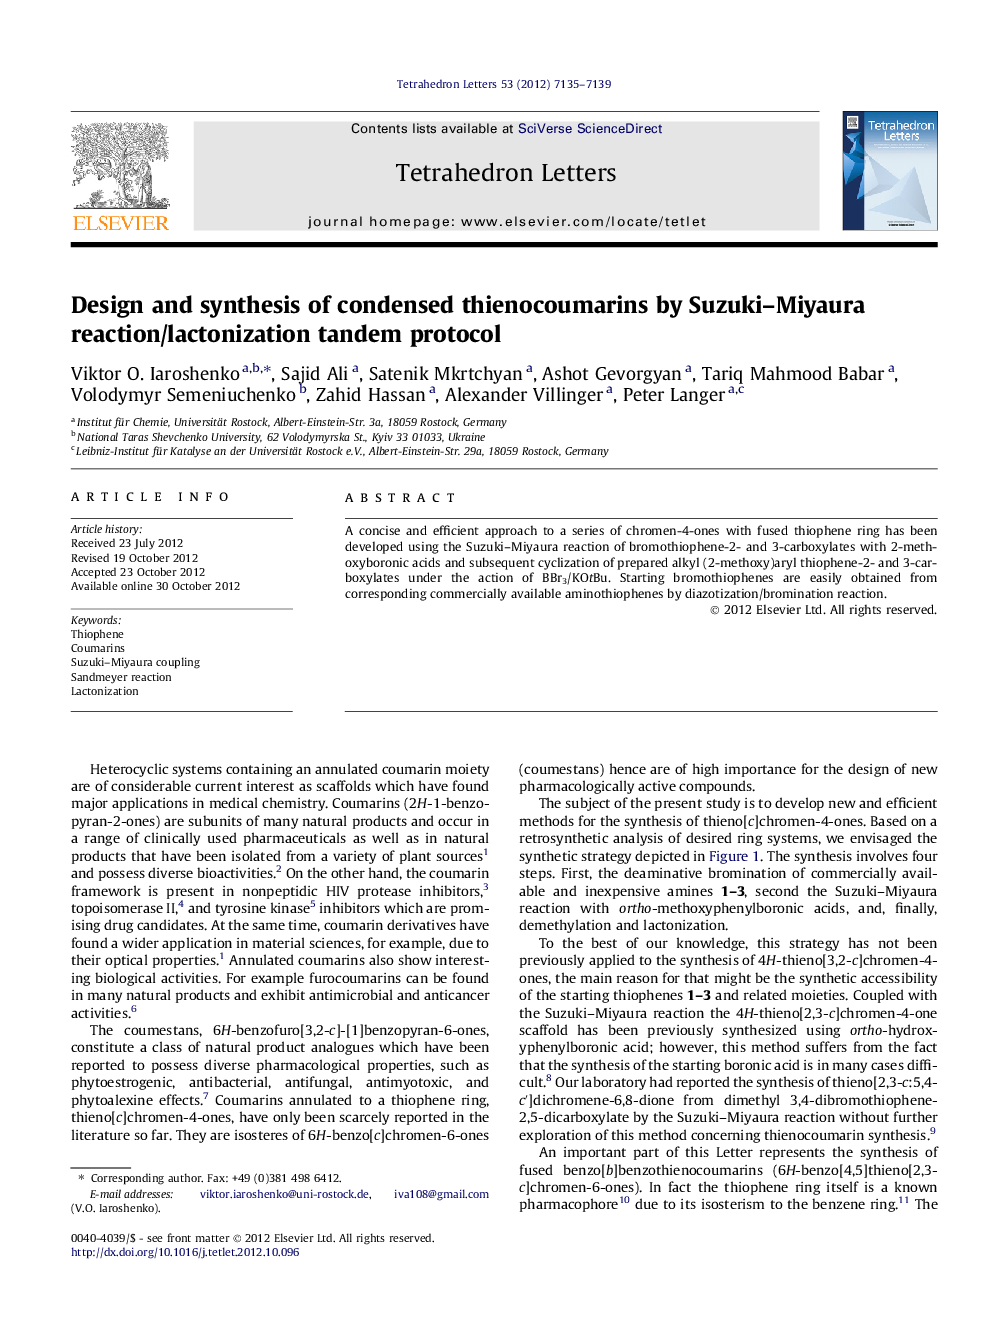 Design and synthesis of condensed thienocoumarins by Suzuki-Miyaura reaction/lactonization tandem protocol